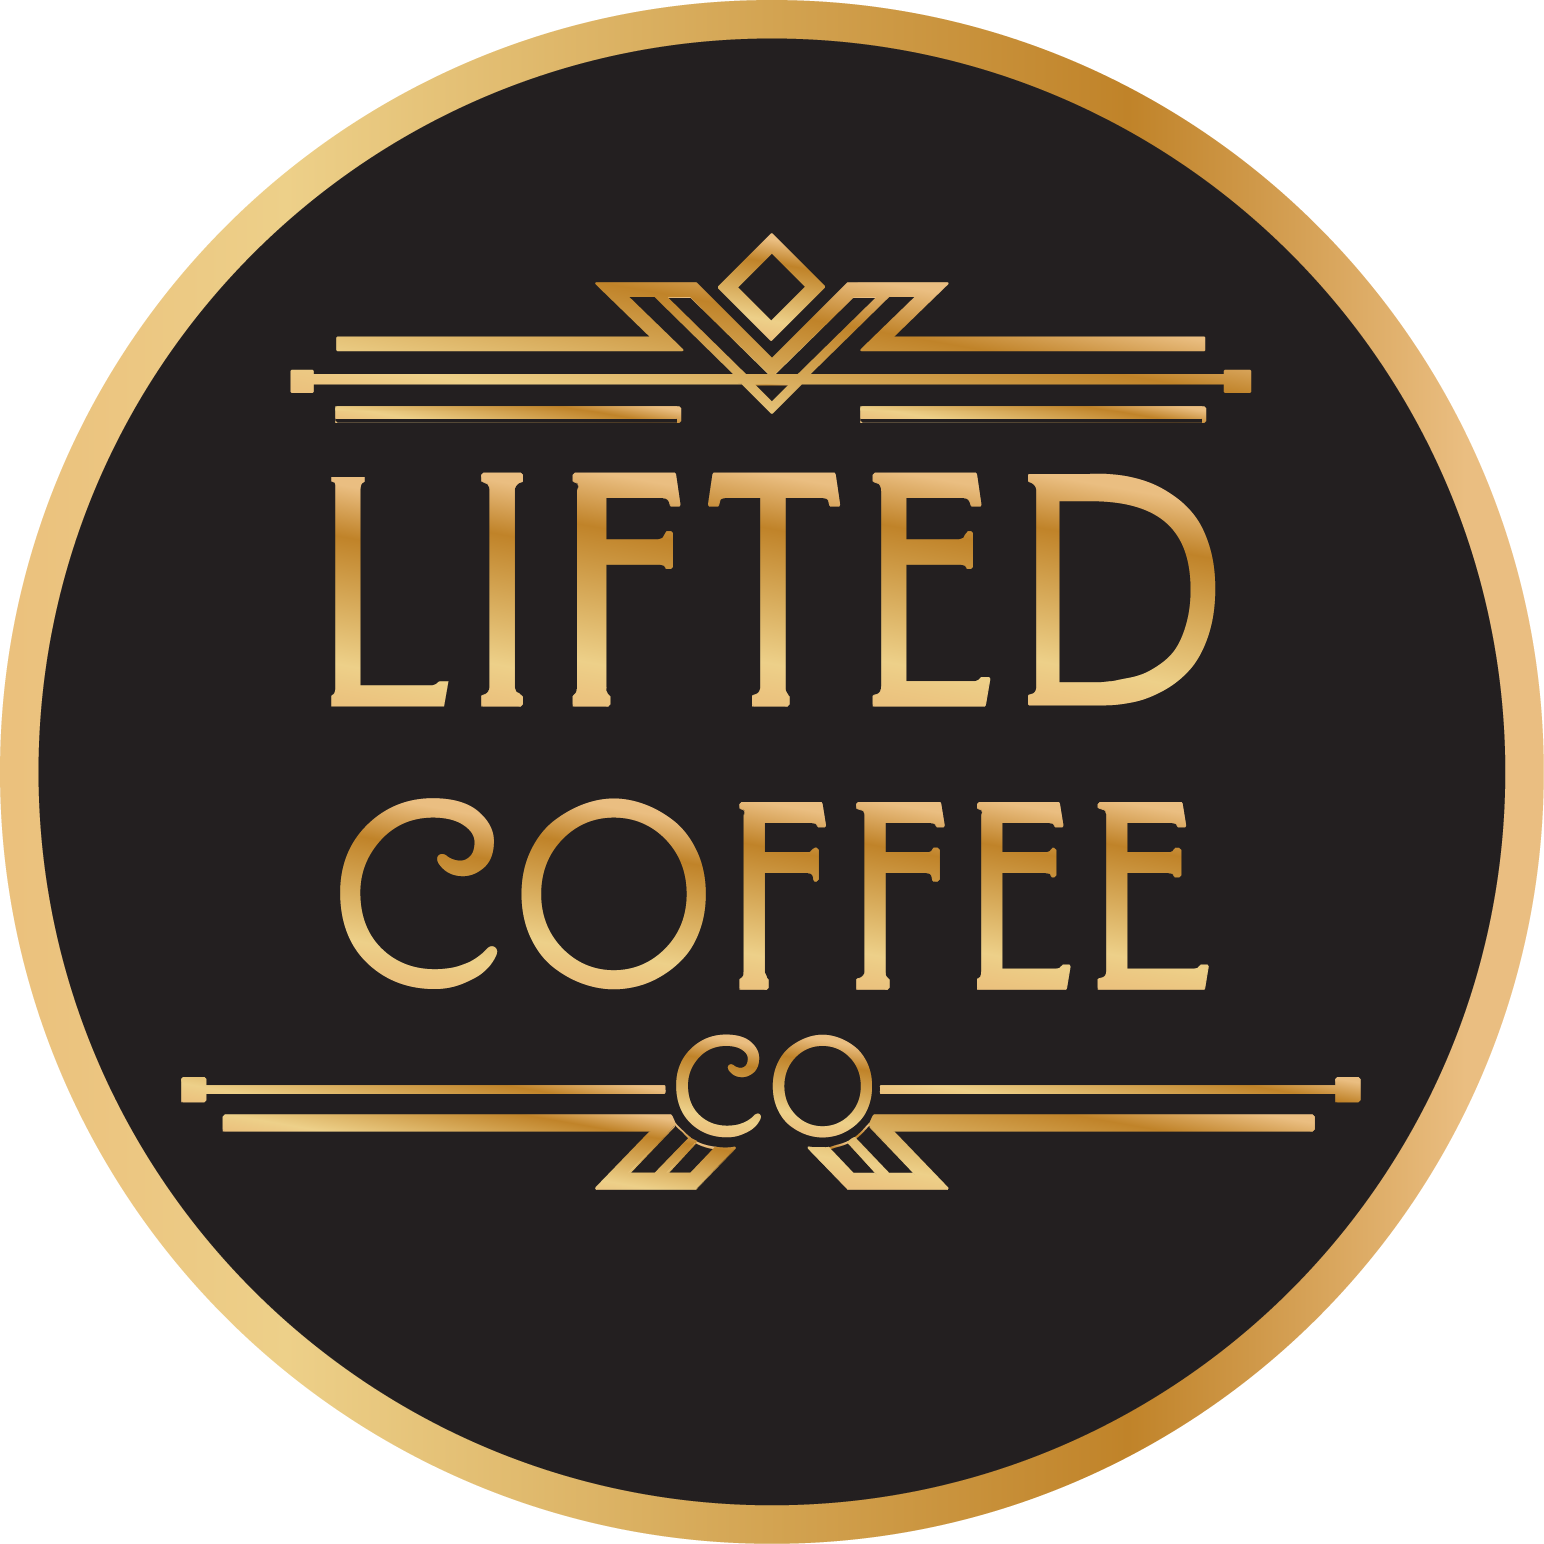 Lifted Coffee Co.